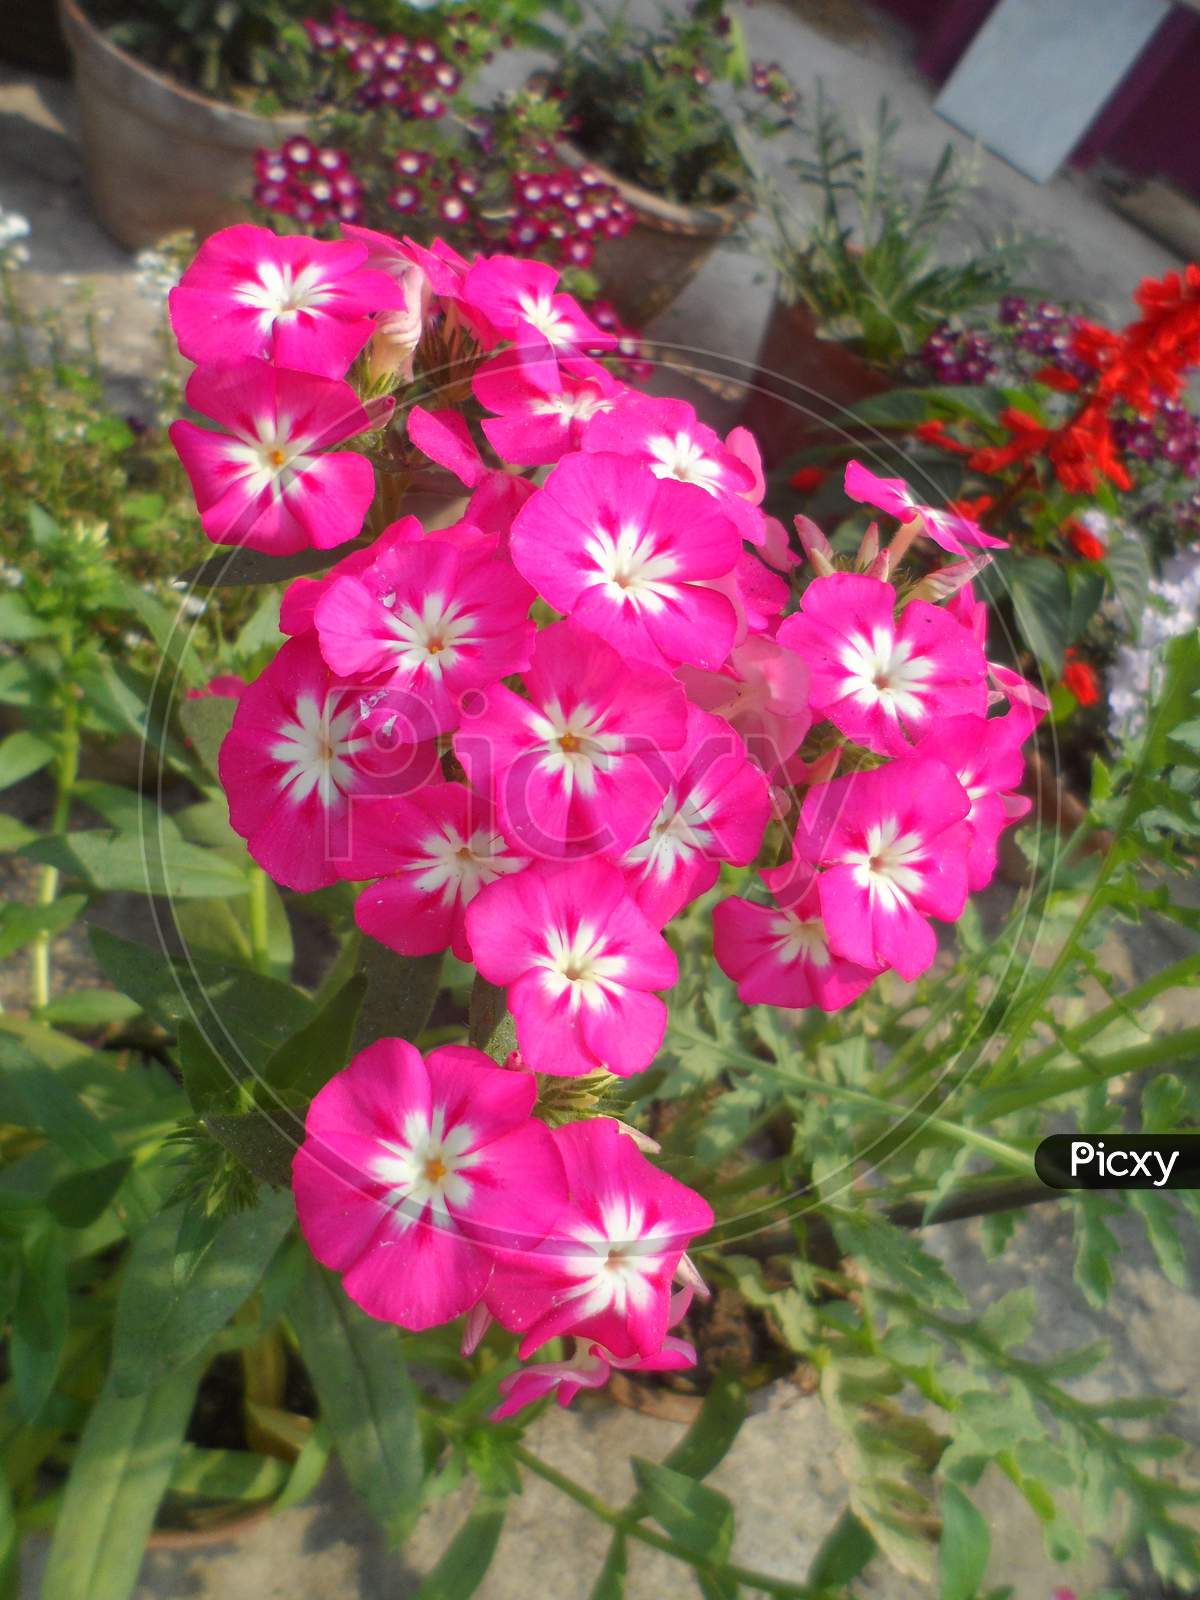 Pink Sweet william flower of garden in India.